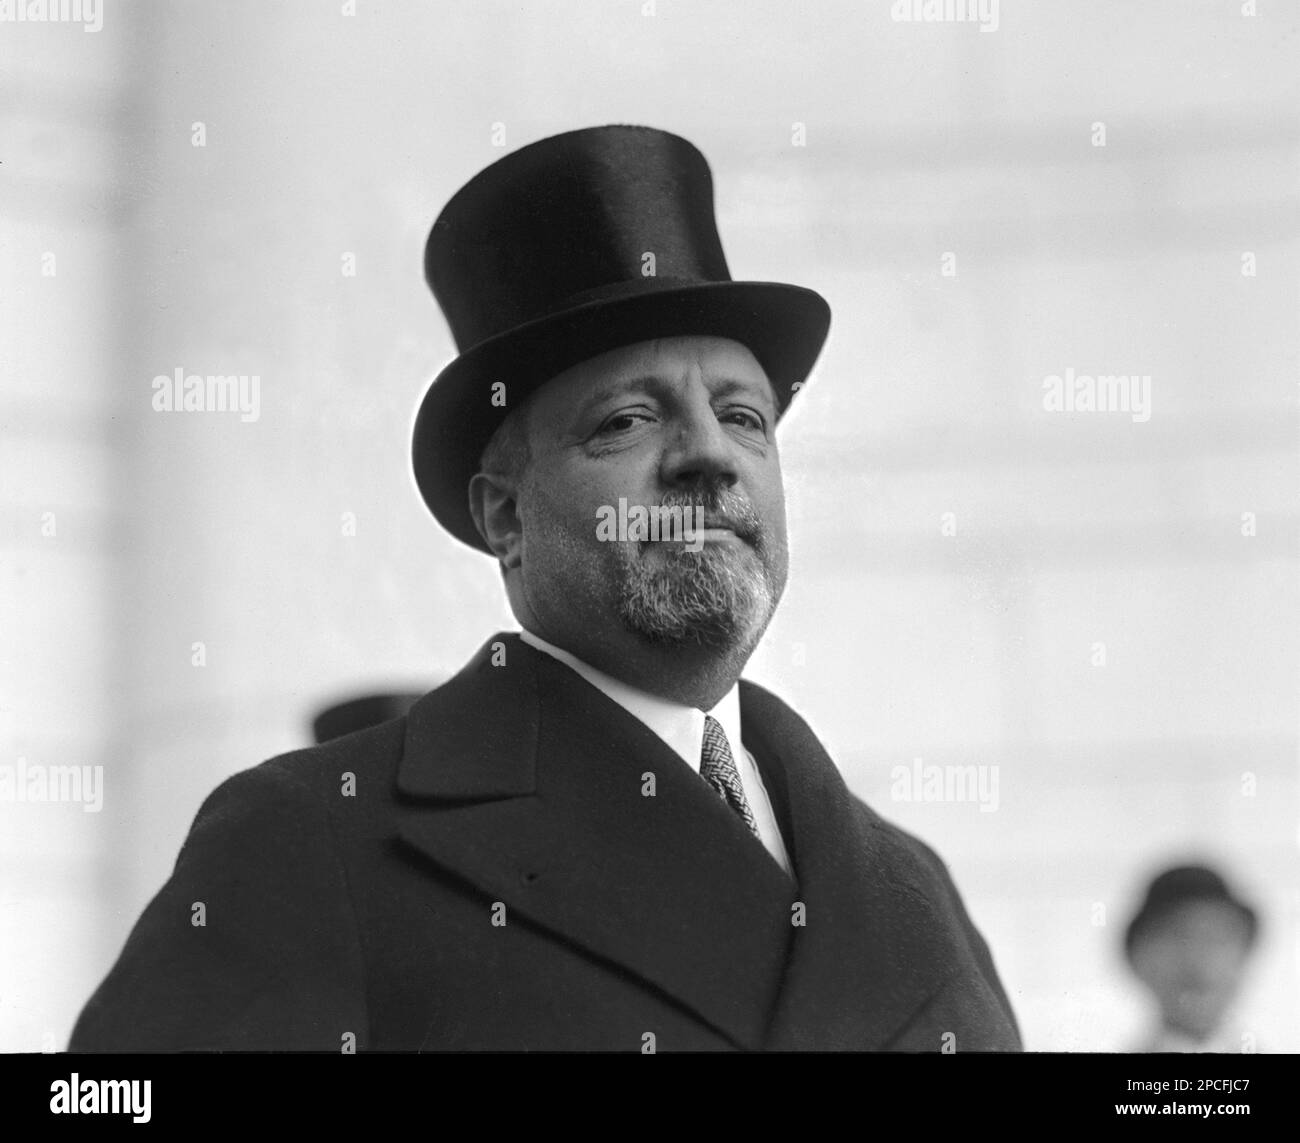 1925 , 2 novembre , Washington , Etats-Unis : le comte italien GIUSEPPE VOLPI di MISURATA ( 1877 - 1947 ) , Chef de la dette commerciale avec l'Italie et les Etats-Unis - Nobiltà italiana - noblesse - ritratto - portrait - barbe - barba - cappello a cilindro - top chapeau - collier - colletto - cravate - cravatta - conte - FASCISMO - FASCISTA - FASCISTE - FASCISME - INDUSTRIEL - POLITHO - POLITICA - POLITIQUE - POLITICIEN ---- Archivio GBB Banque D'Images